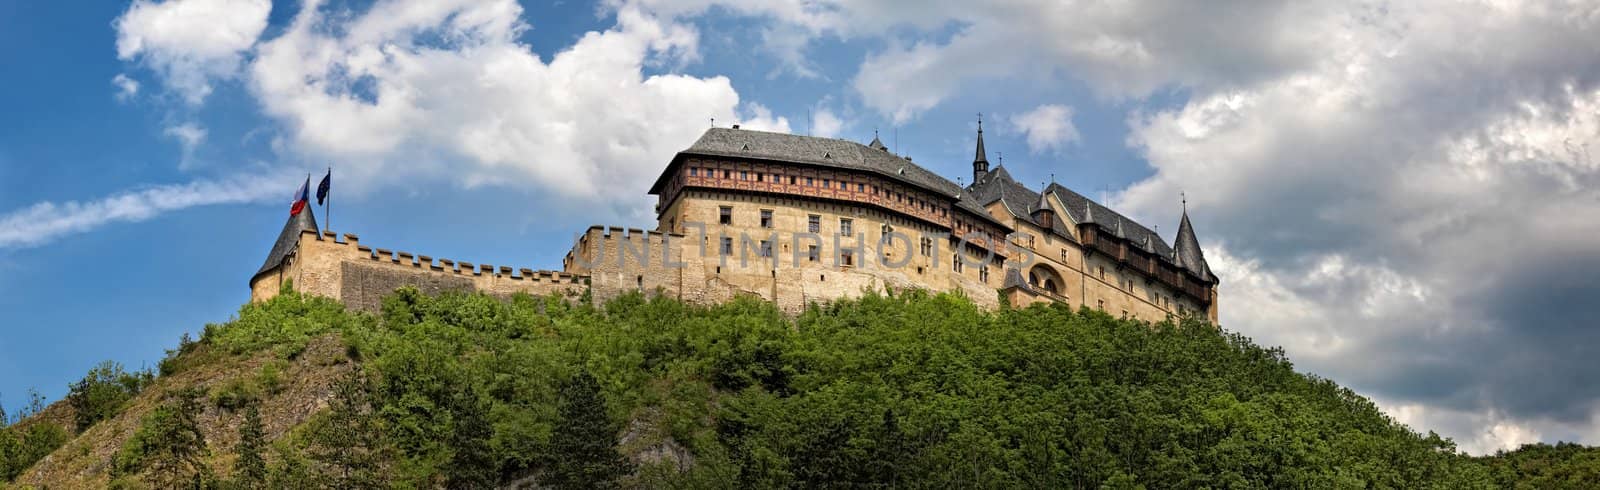 panoramic view of castle Karlstejn, Czech Republic by zhu_zhu